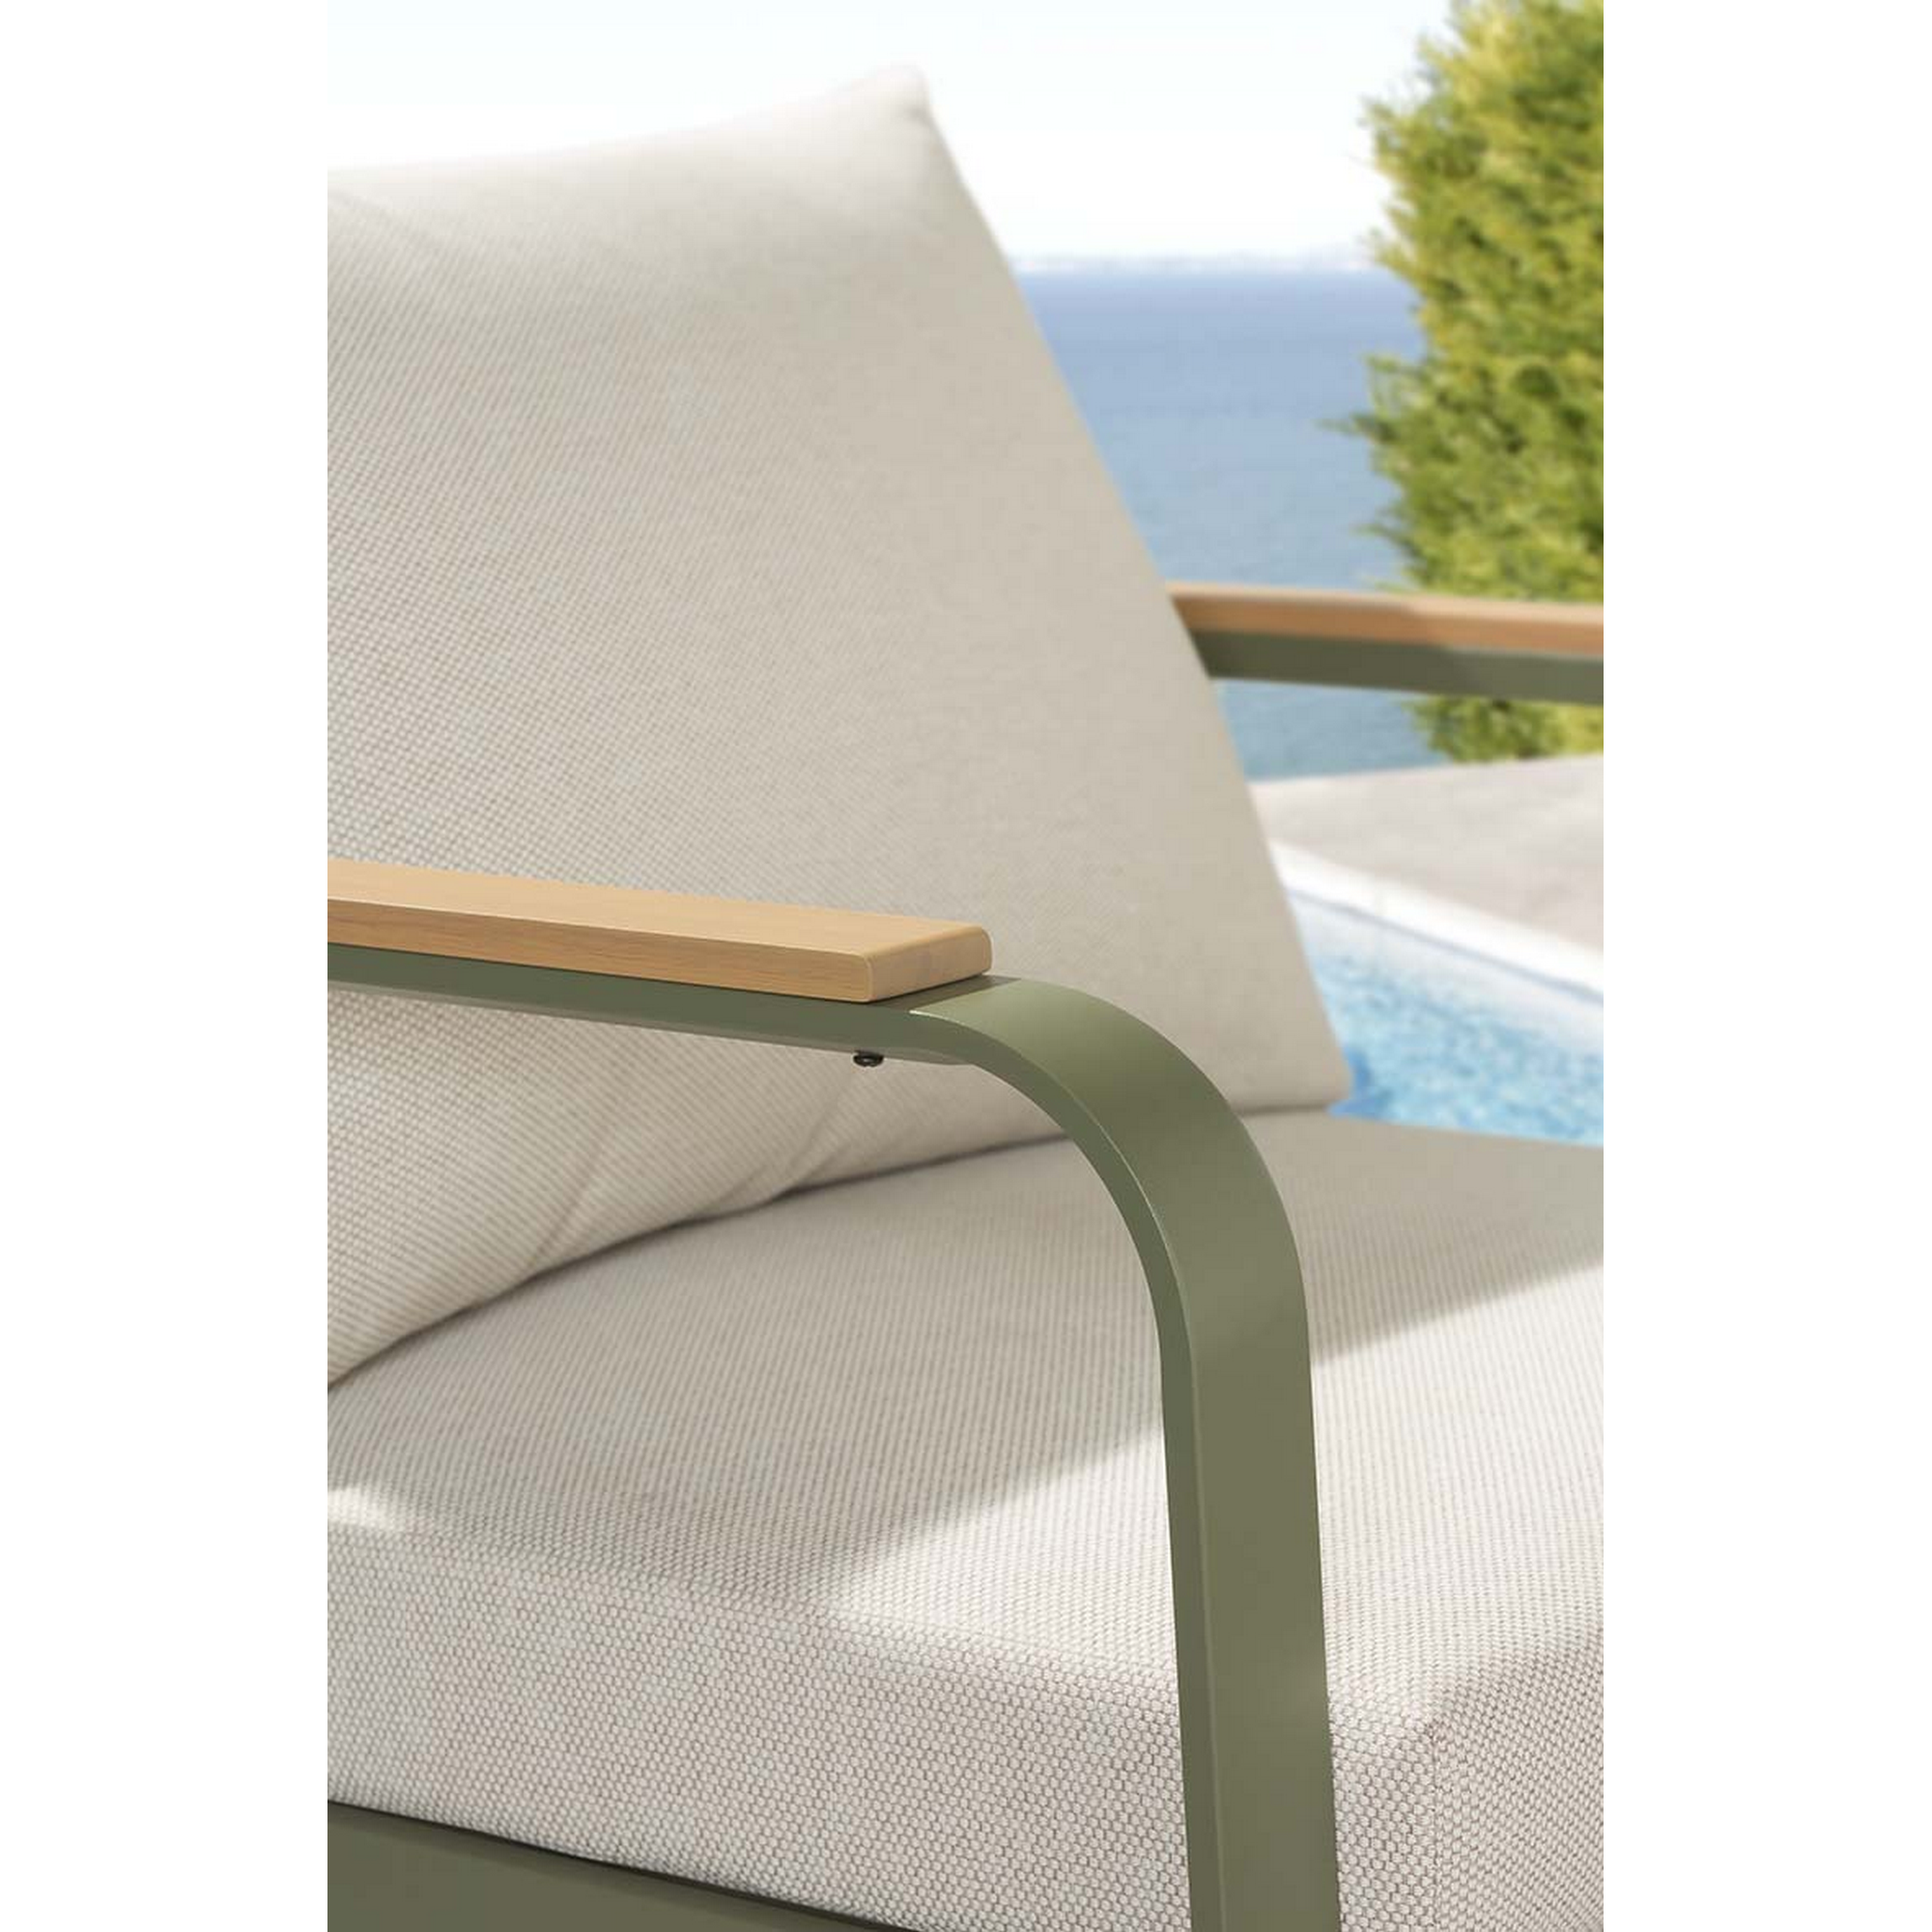 Loungemöbel-Set 'Martha' beige/grün 4-teilig + product picture